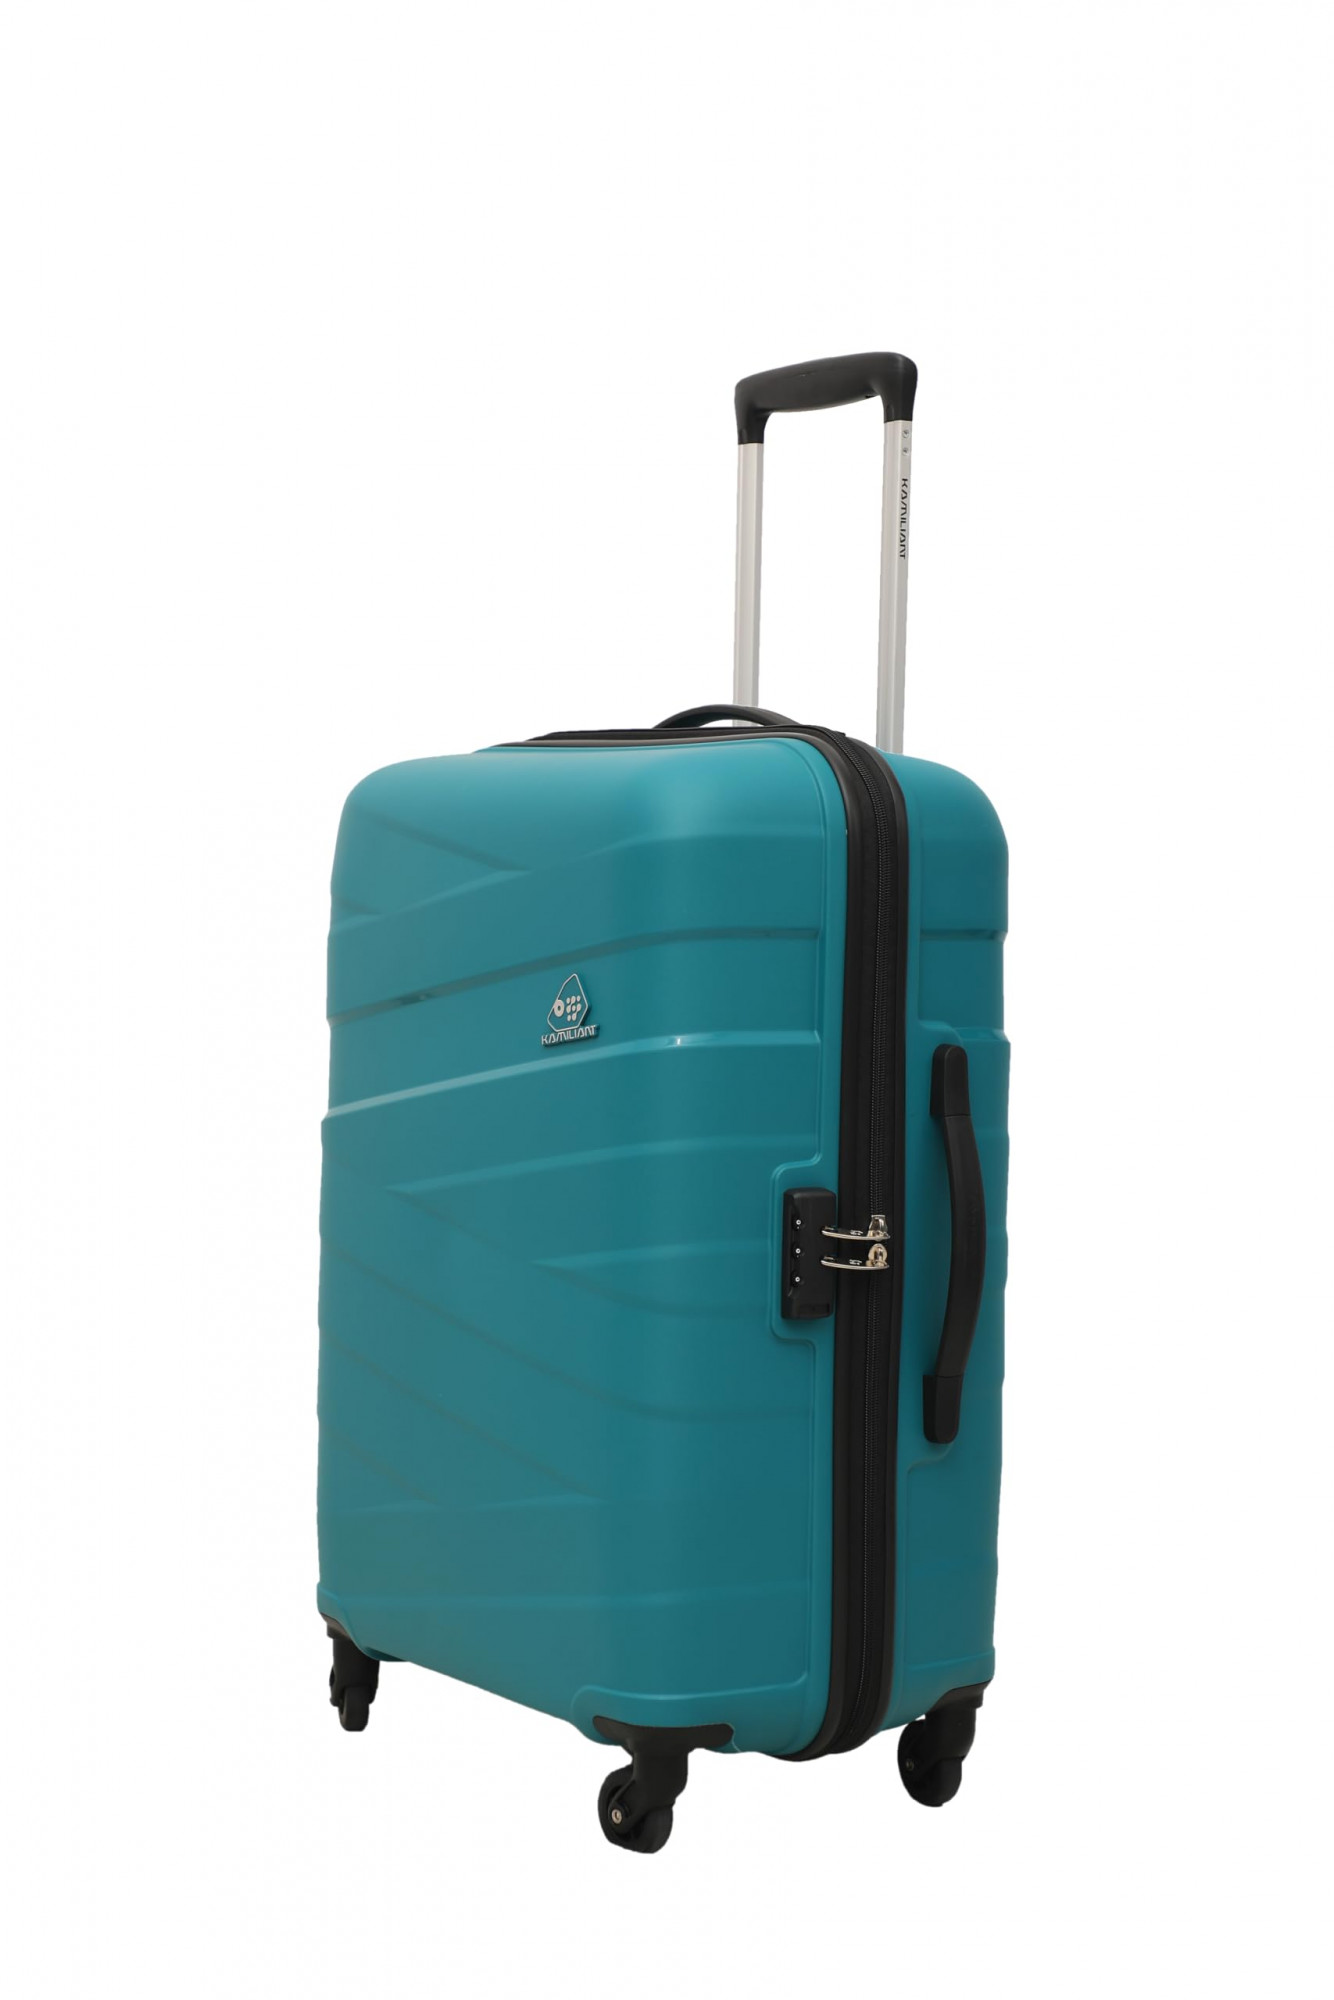 NASHER MILES Hard-Side Polypropylene Cabin Luggage Bag Orange 20 Inch |  55CM Trolley Bag Expandable Cabin Suitcase 4 Wheels - 20 inch Orange -  Price in India | Flipkart.com